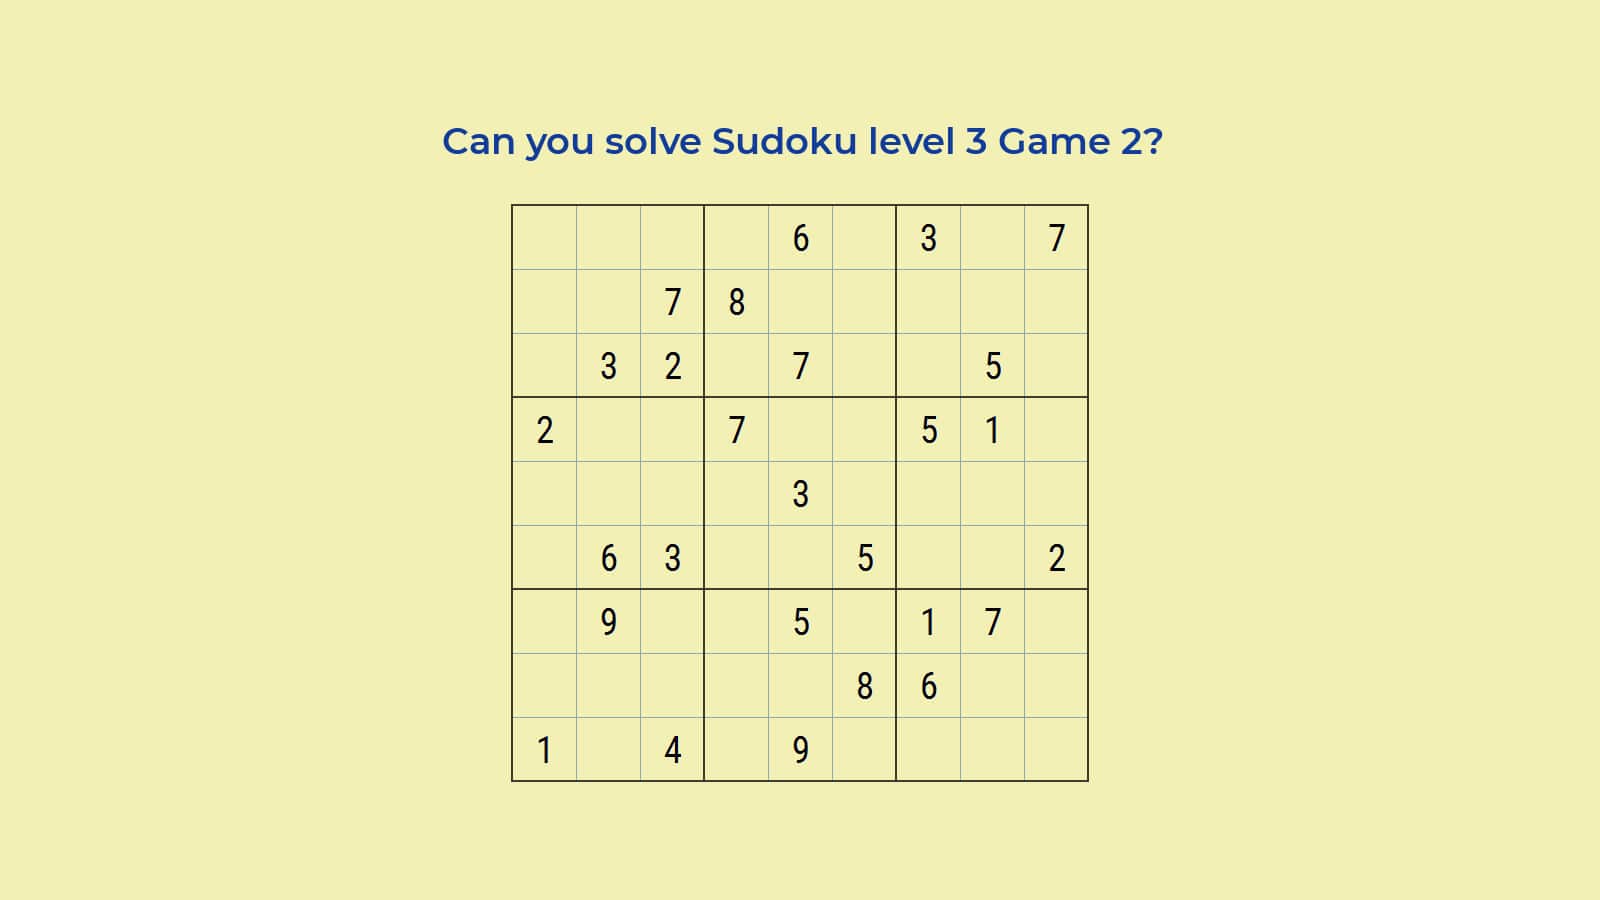 Sudoku level 3 Game 2: Learn to solve high level hard Sudoku